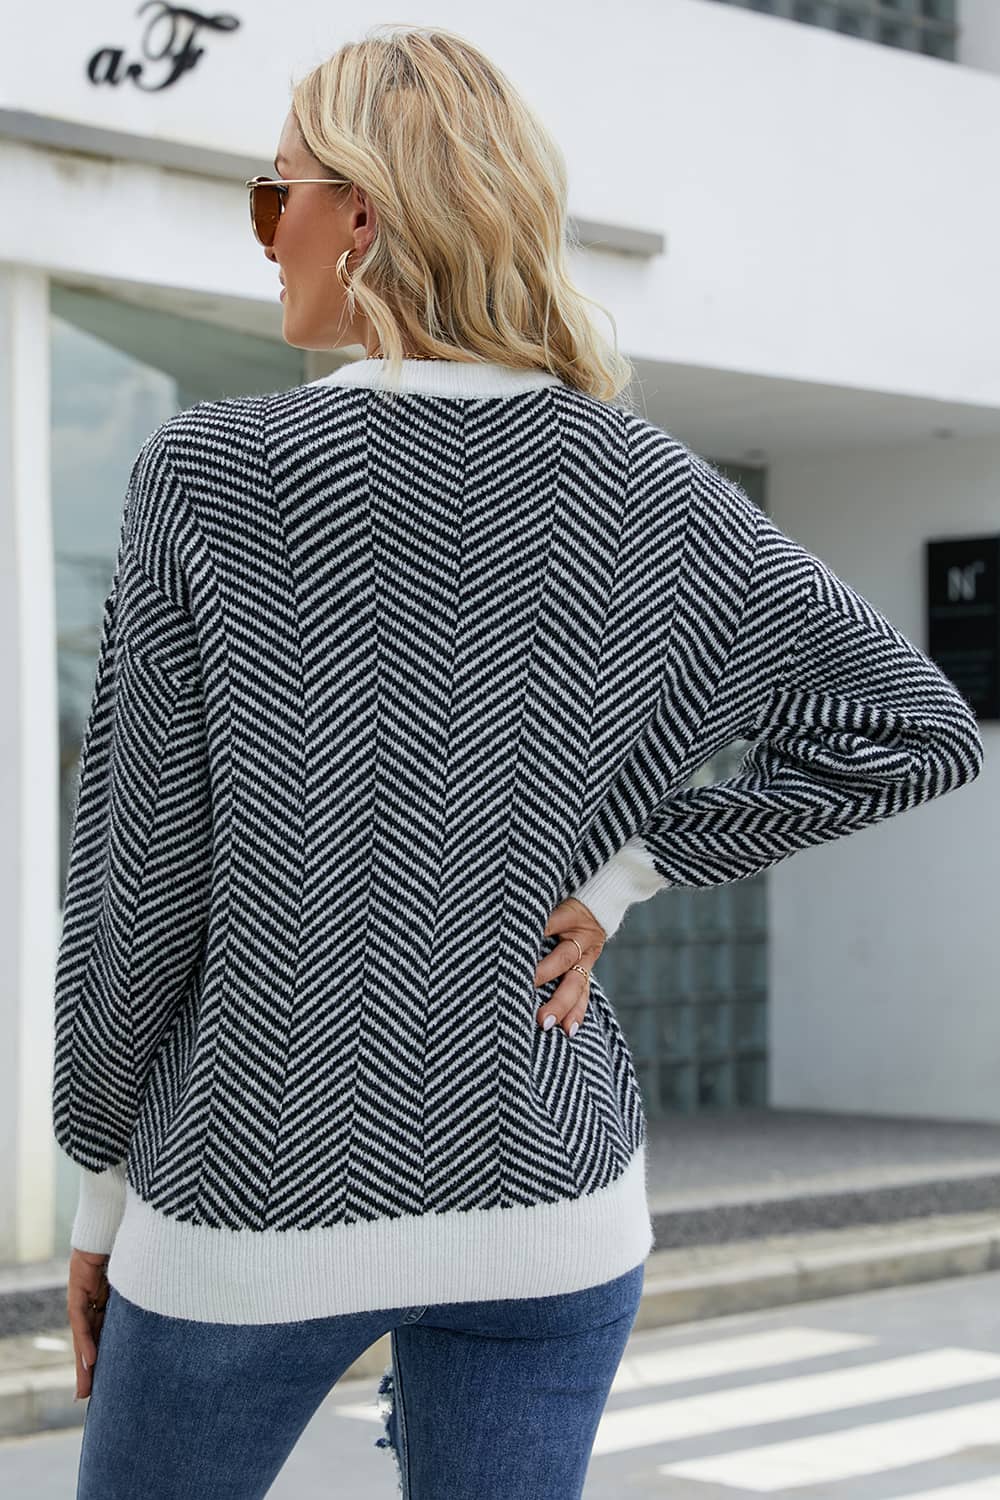 Long Sleeve Round Neck Fashion Knit Striped Sweater